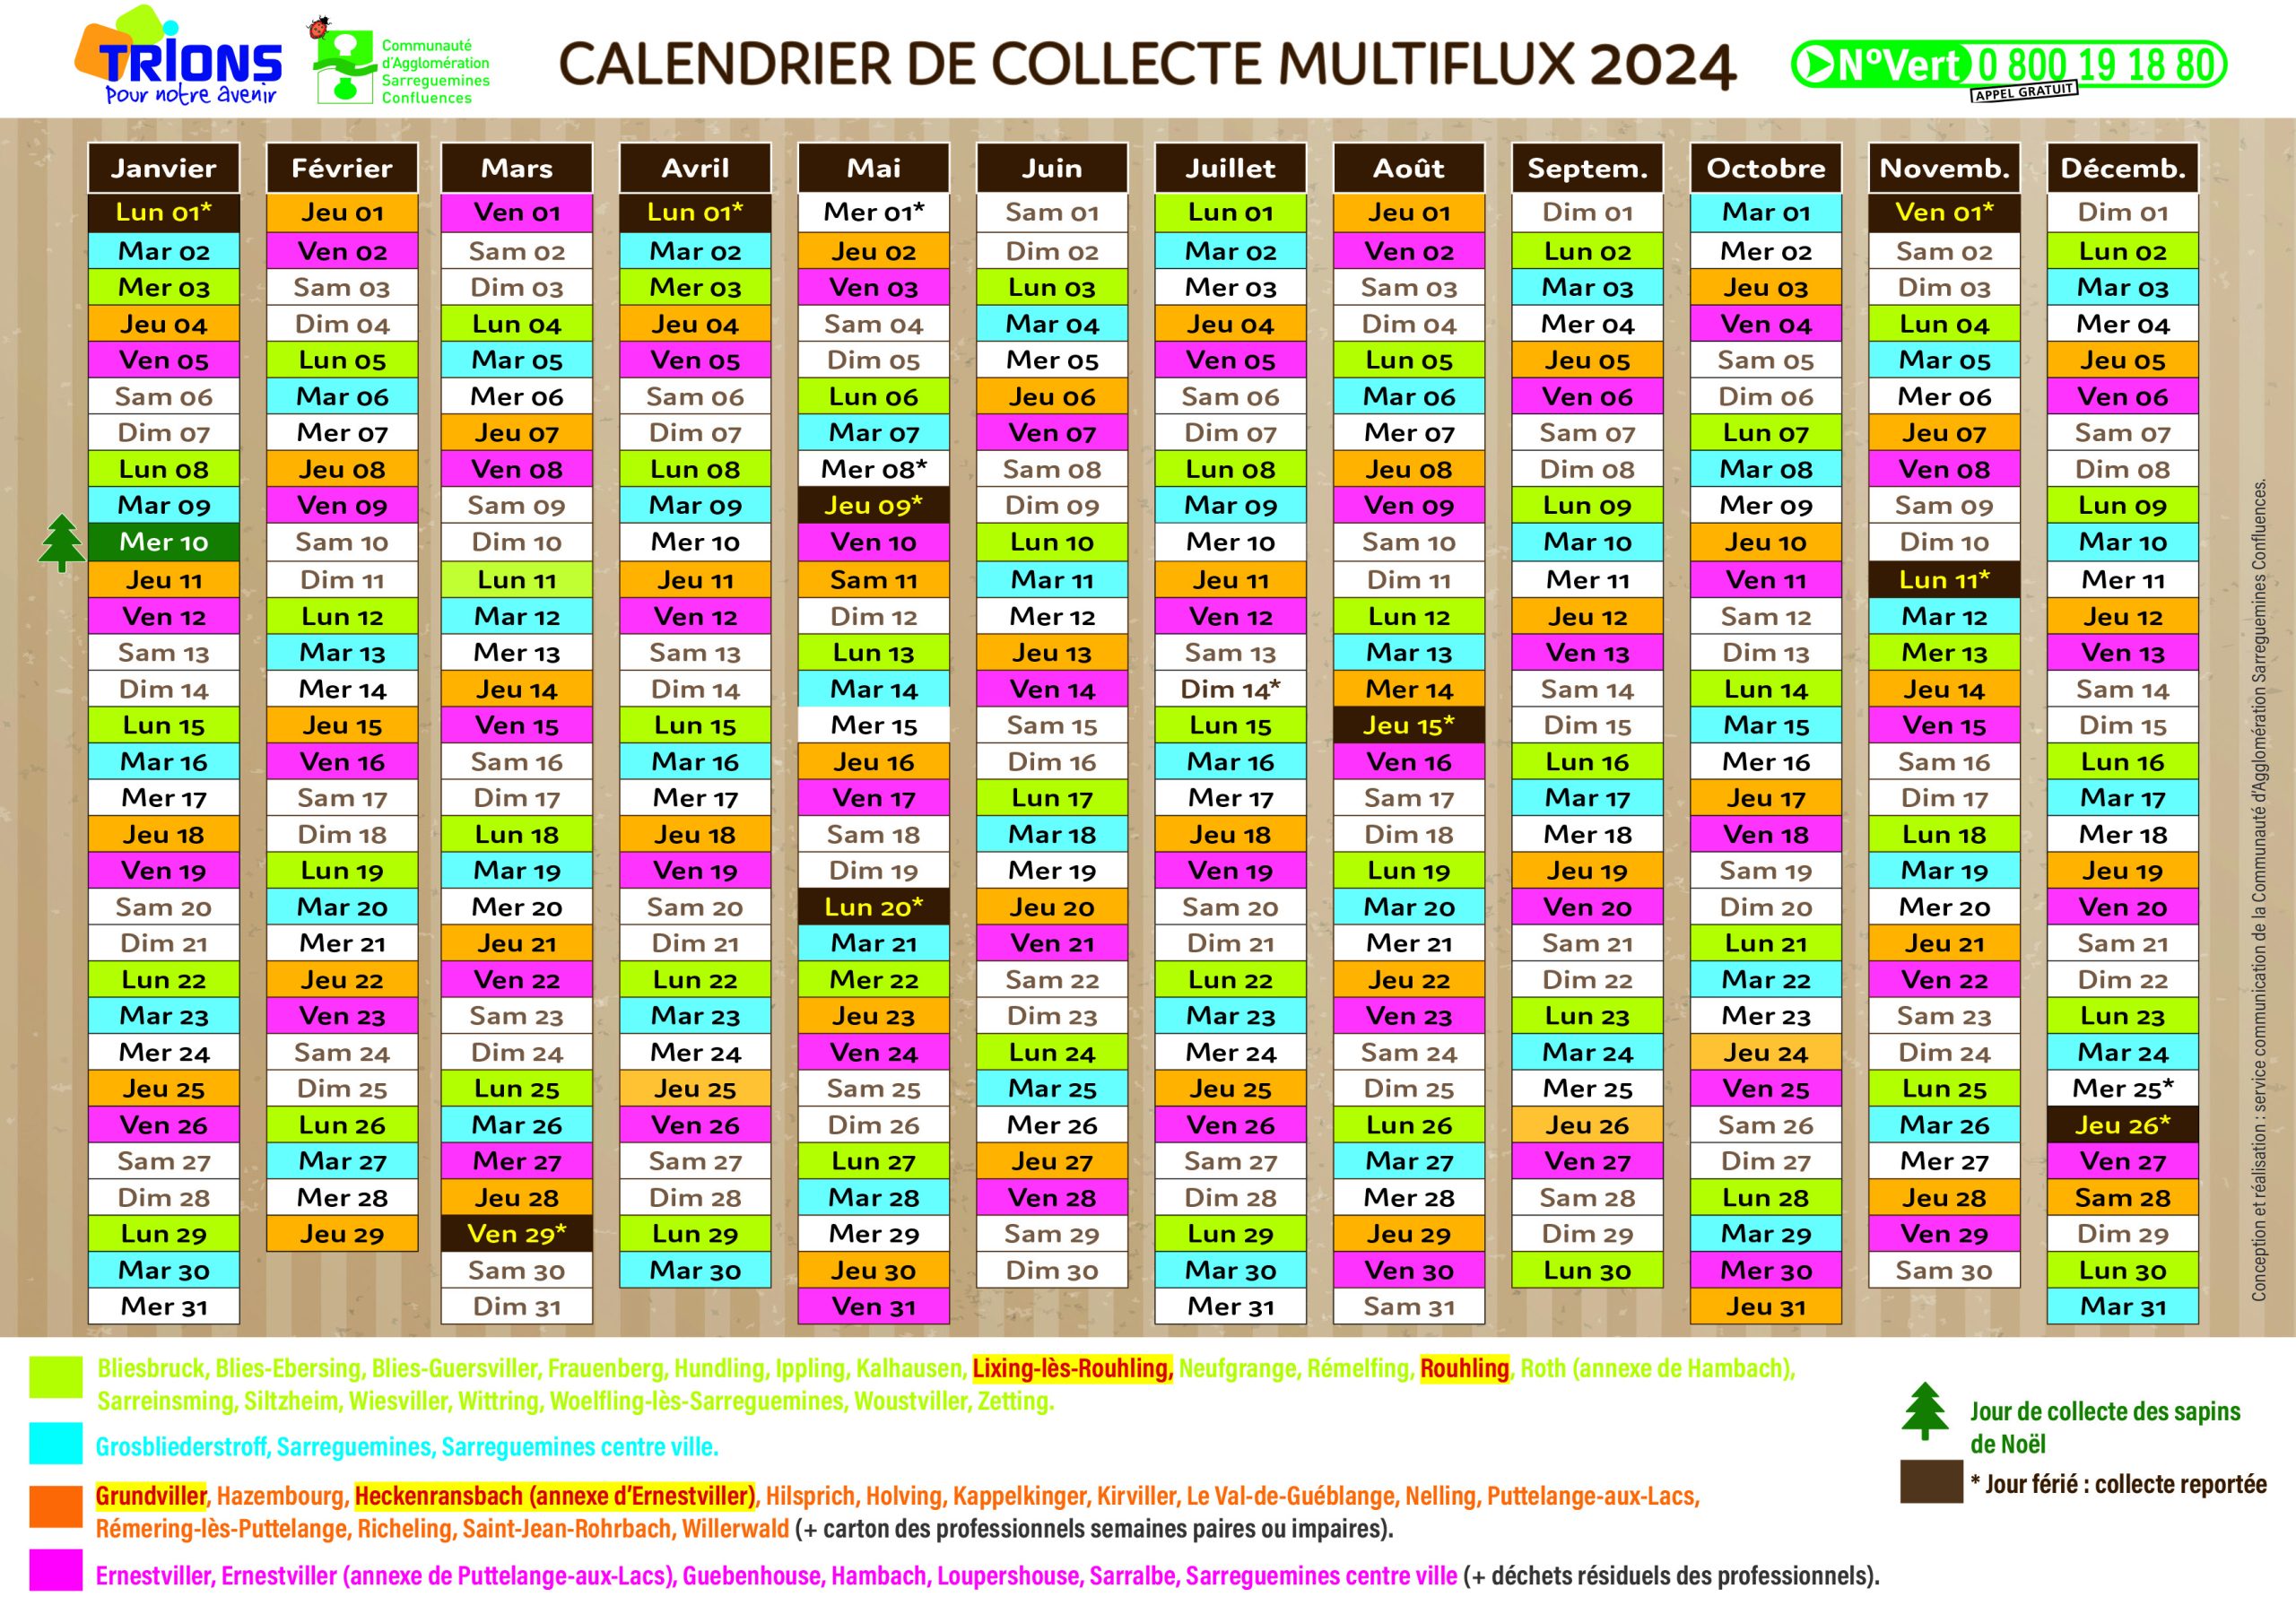 Calendrier de collecte multiflux 2024